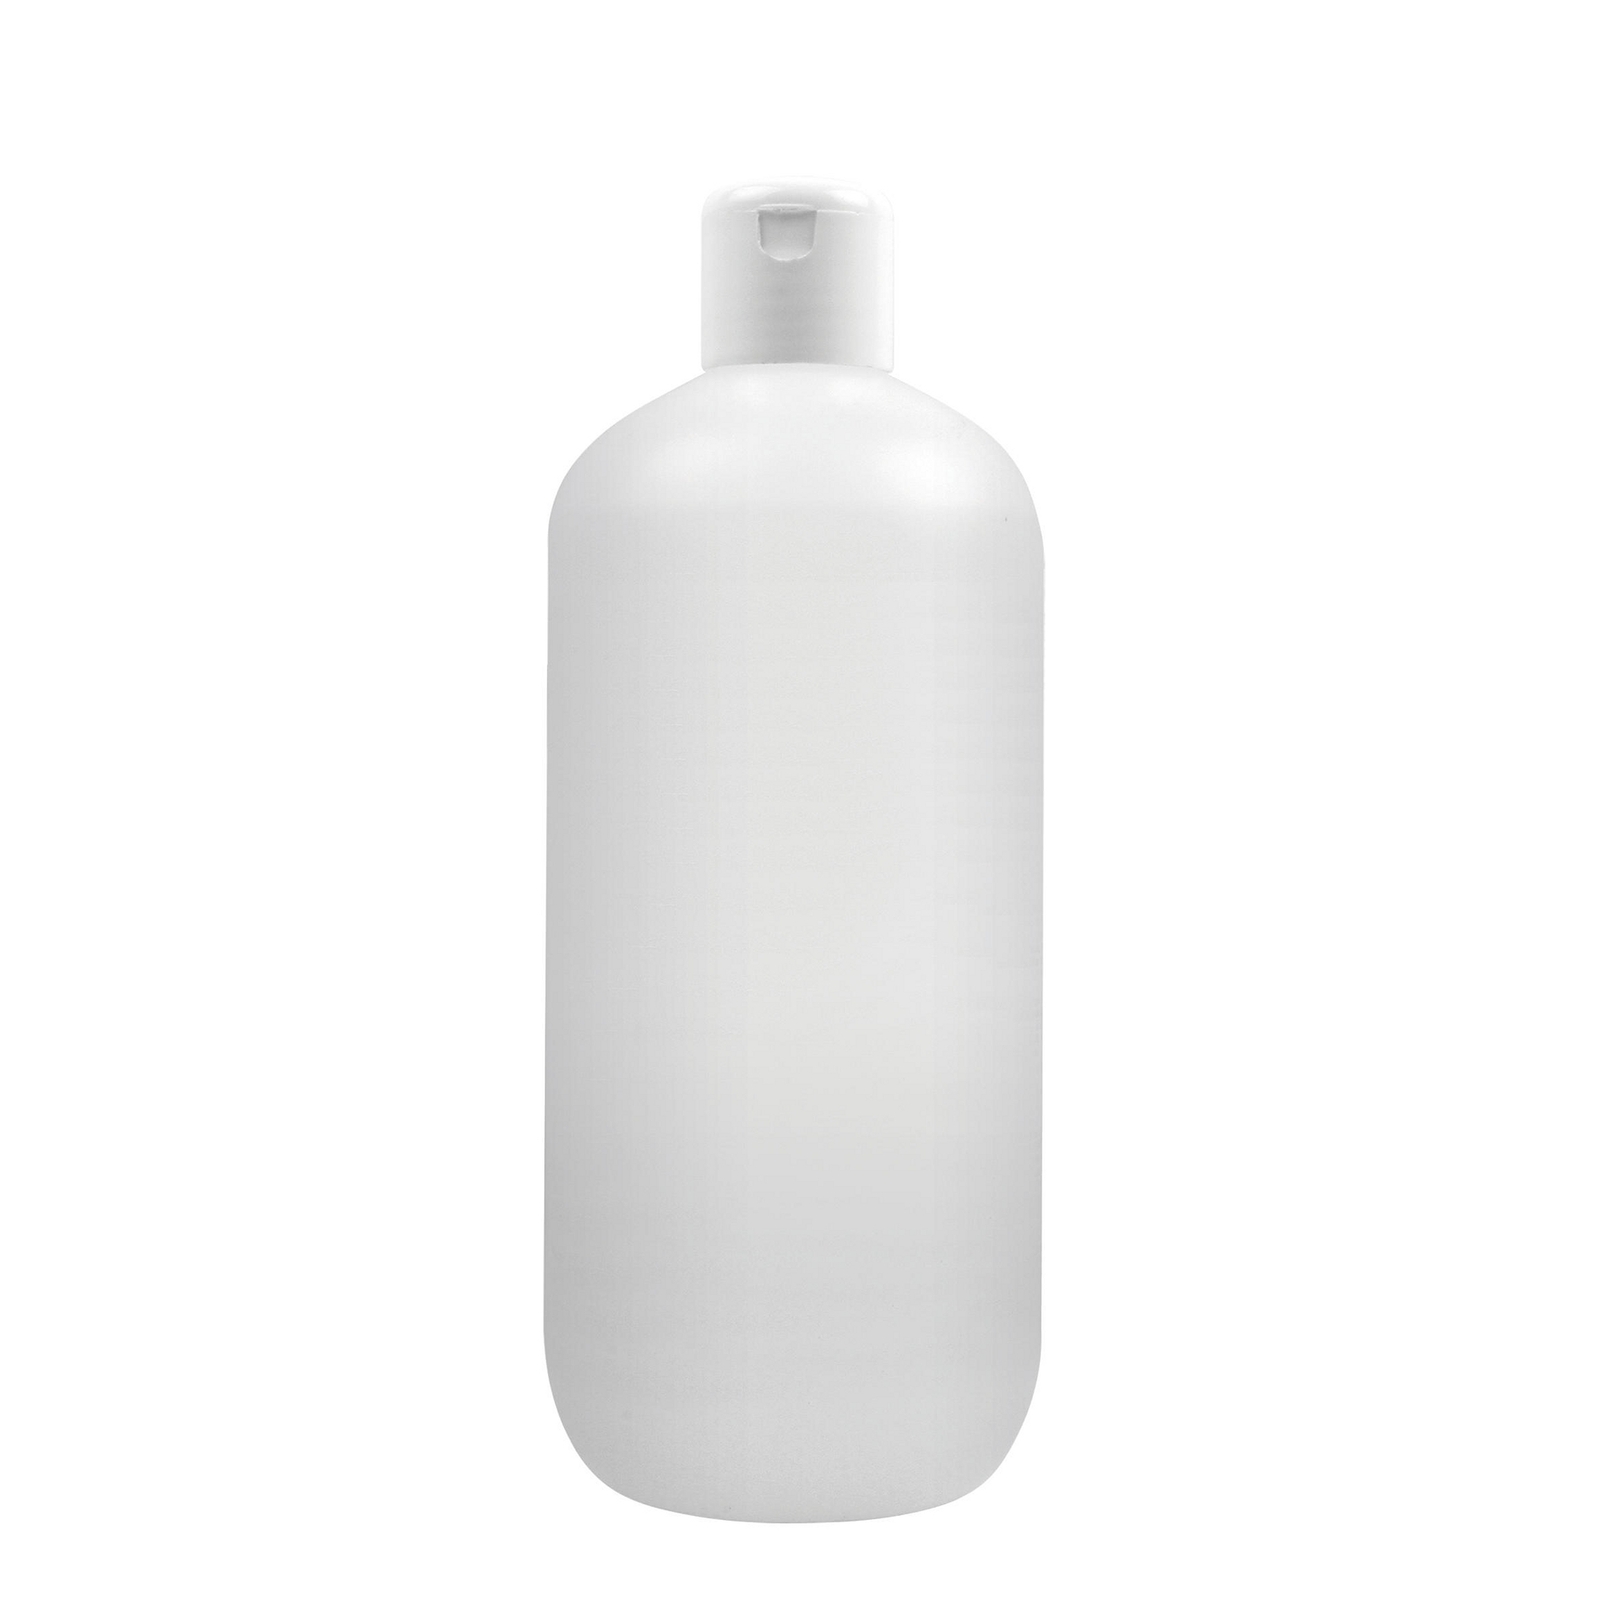 Refill Bottle 0.5L with Flip Cap